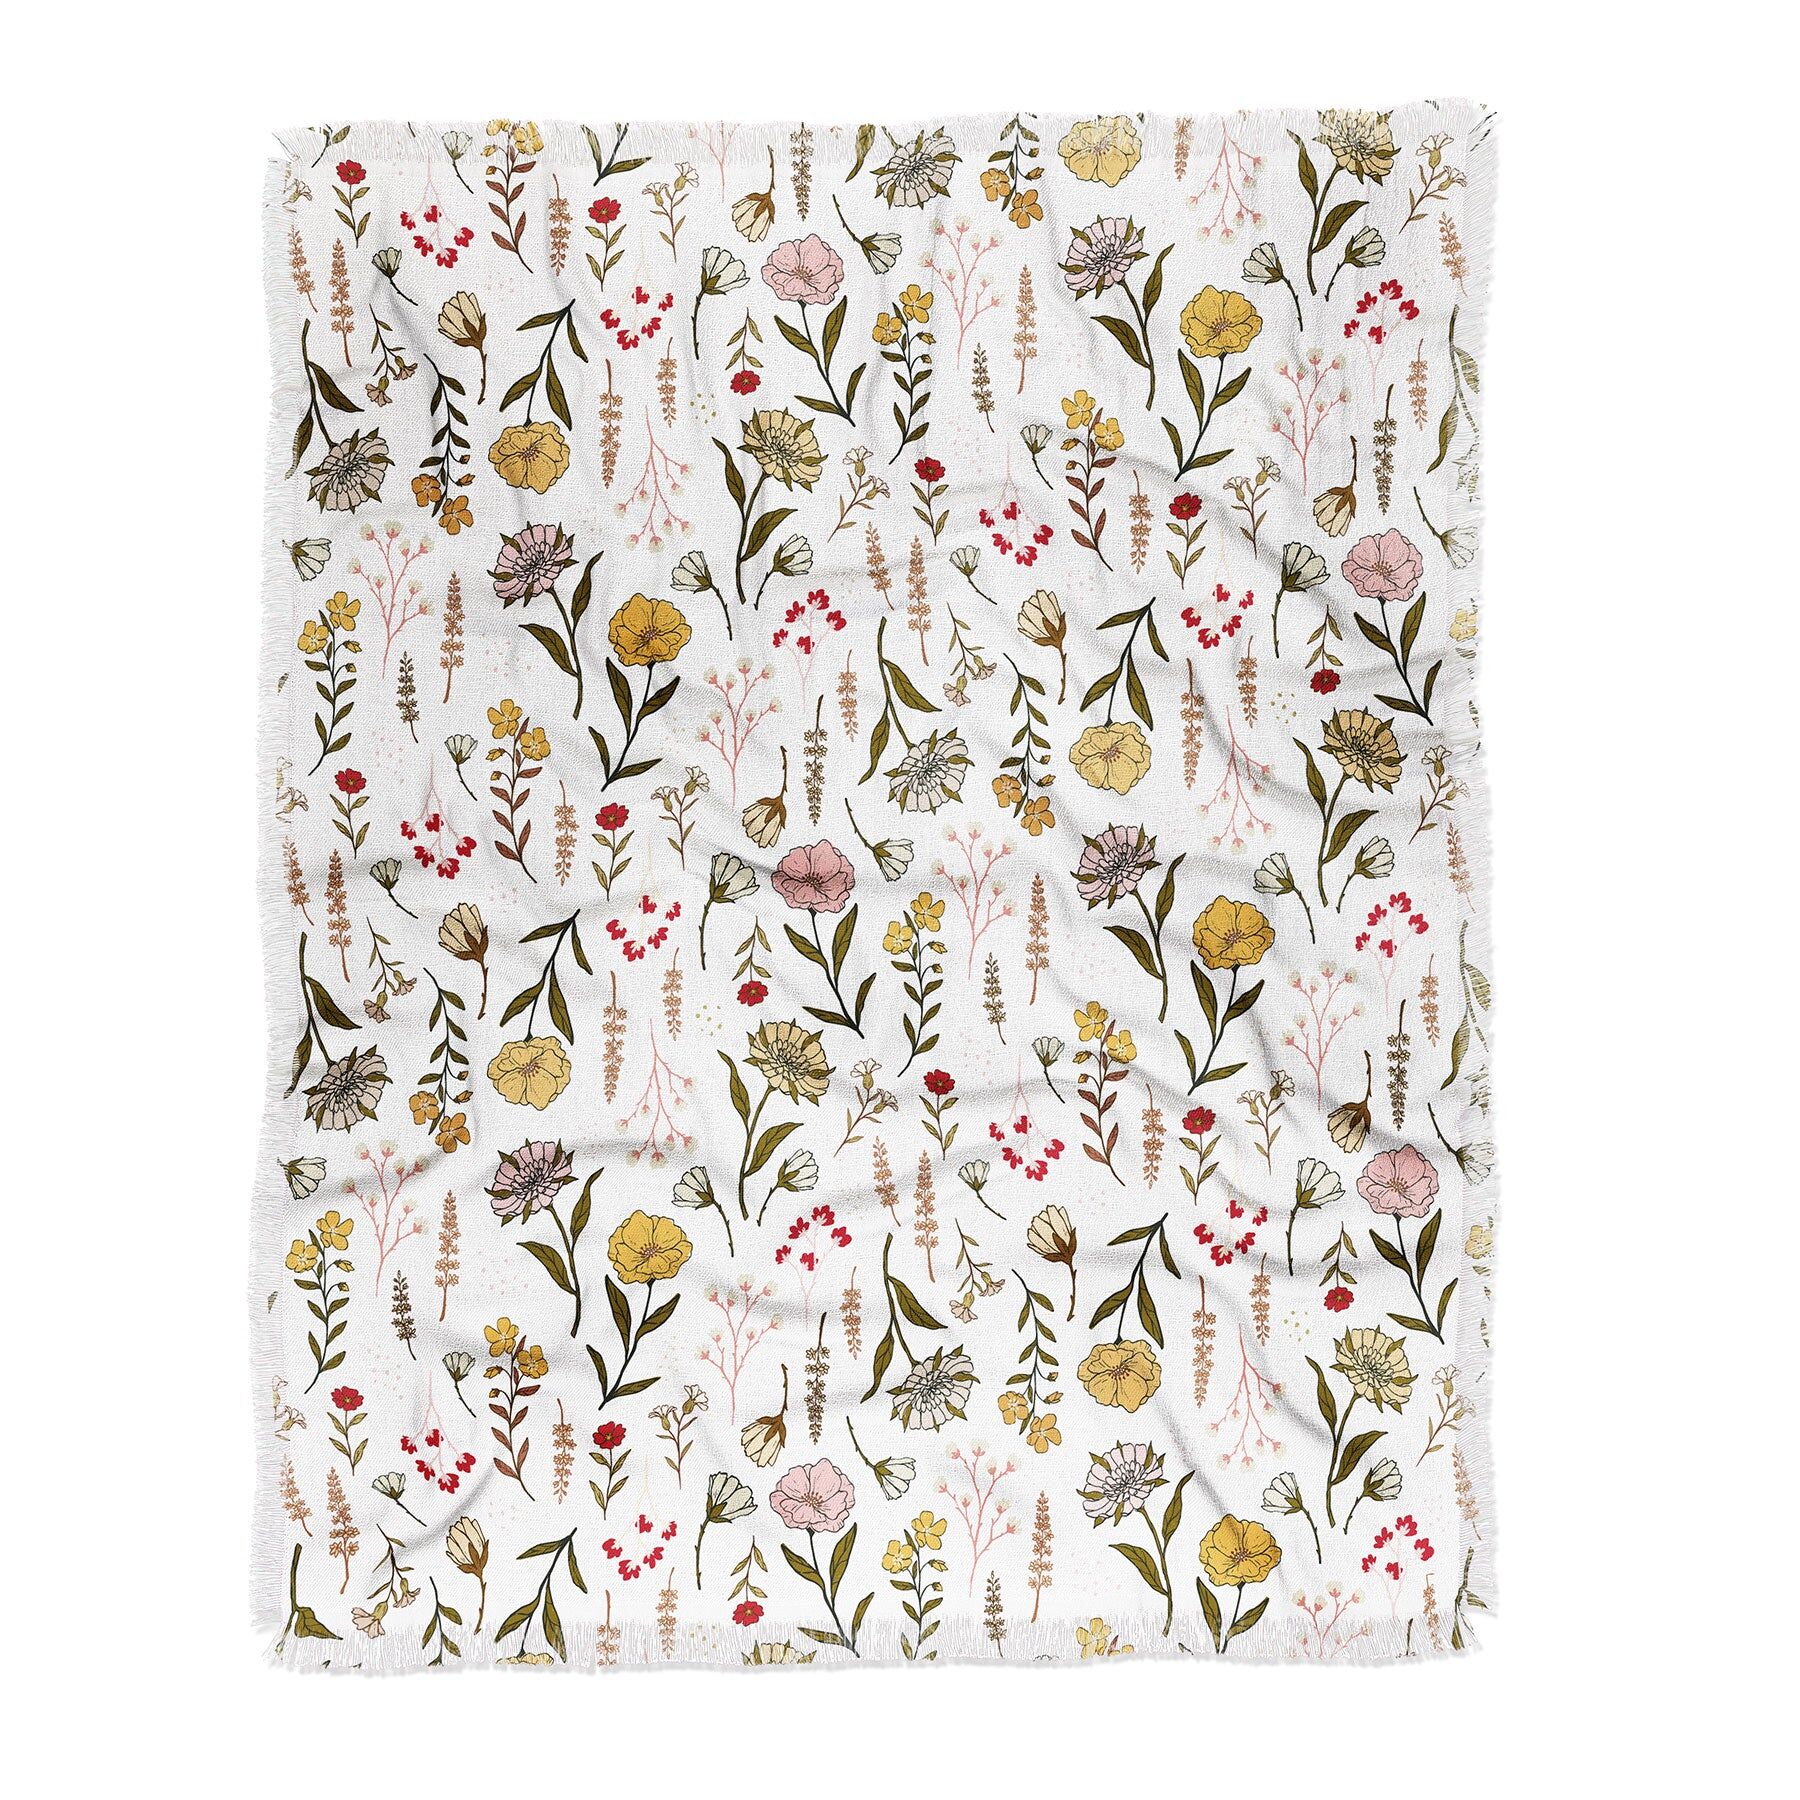 Deny Designs Avenie Spring Garden Collection Iv Throw Blanket